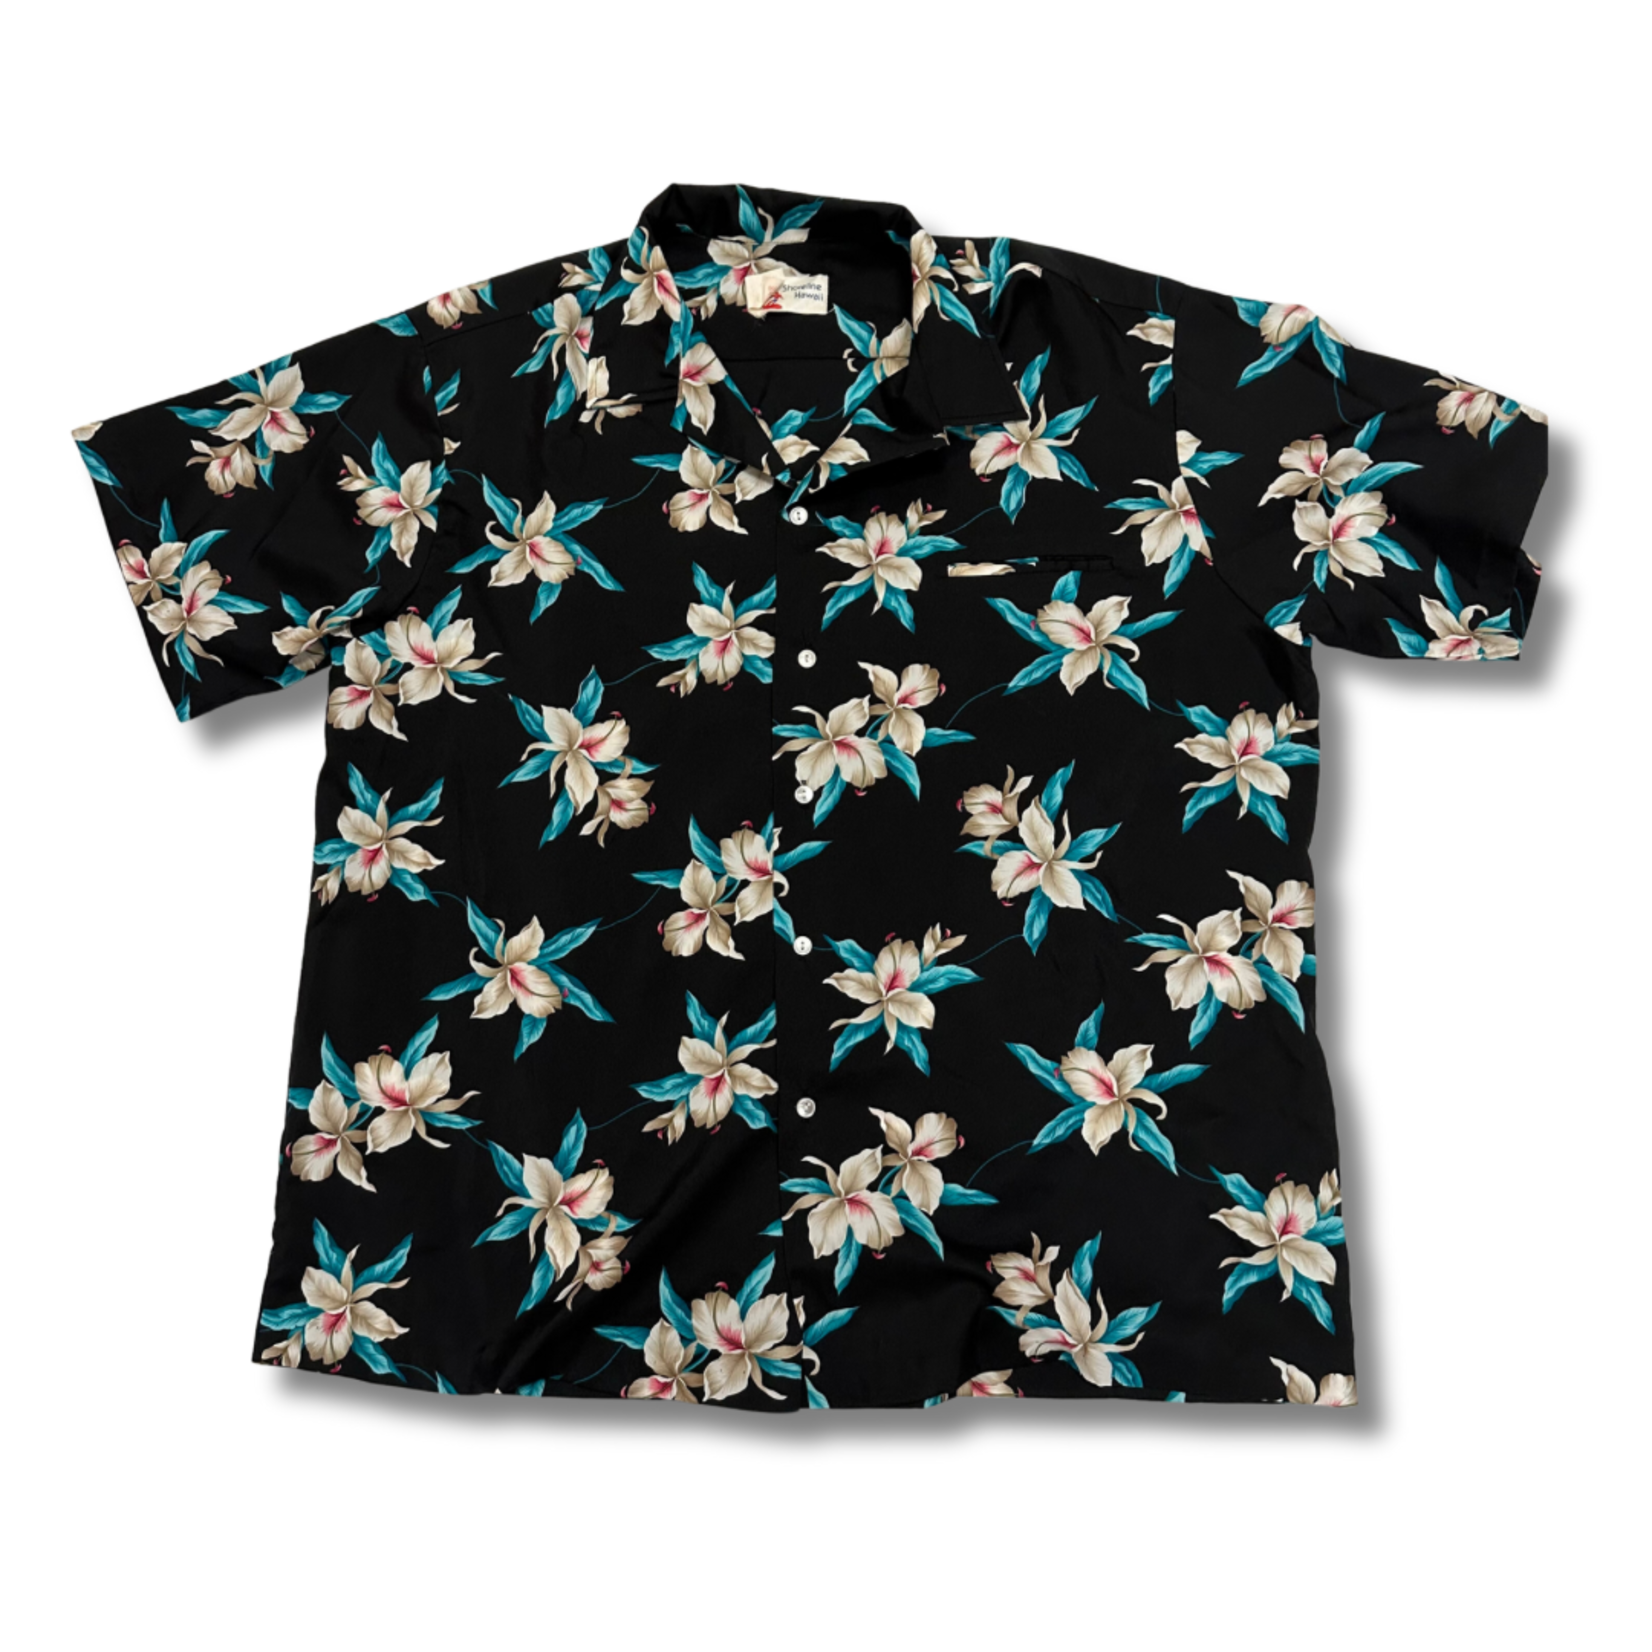 Mission Zero Men's Vintage Aloha Shirt - Shoreline Hawaii Black Floral - 2XL